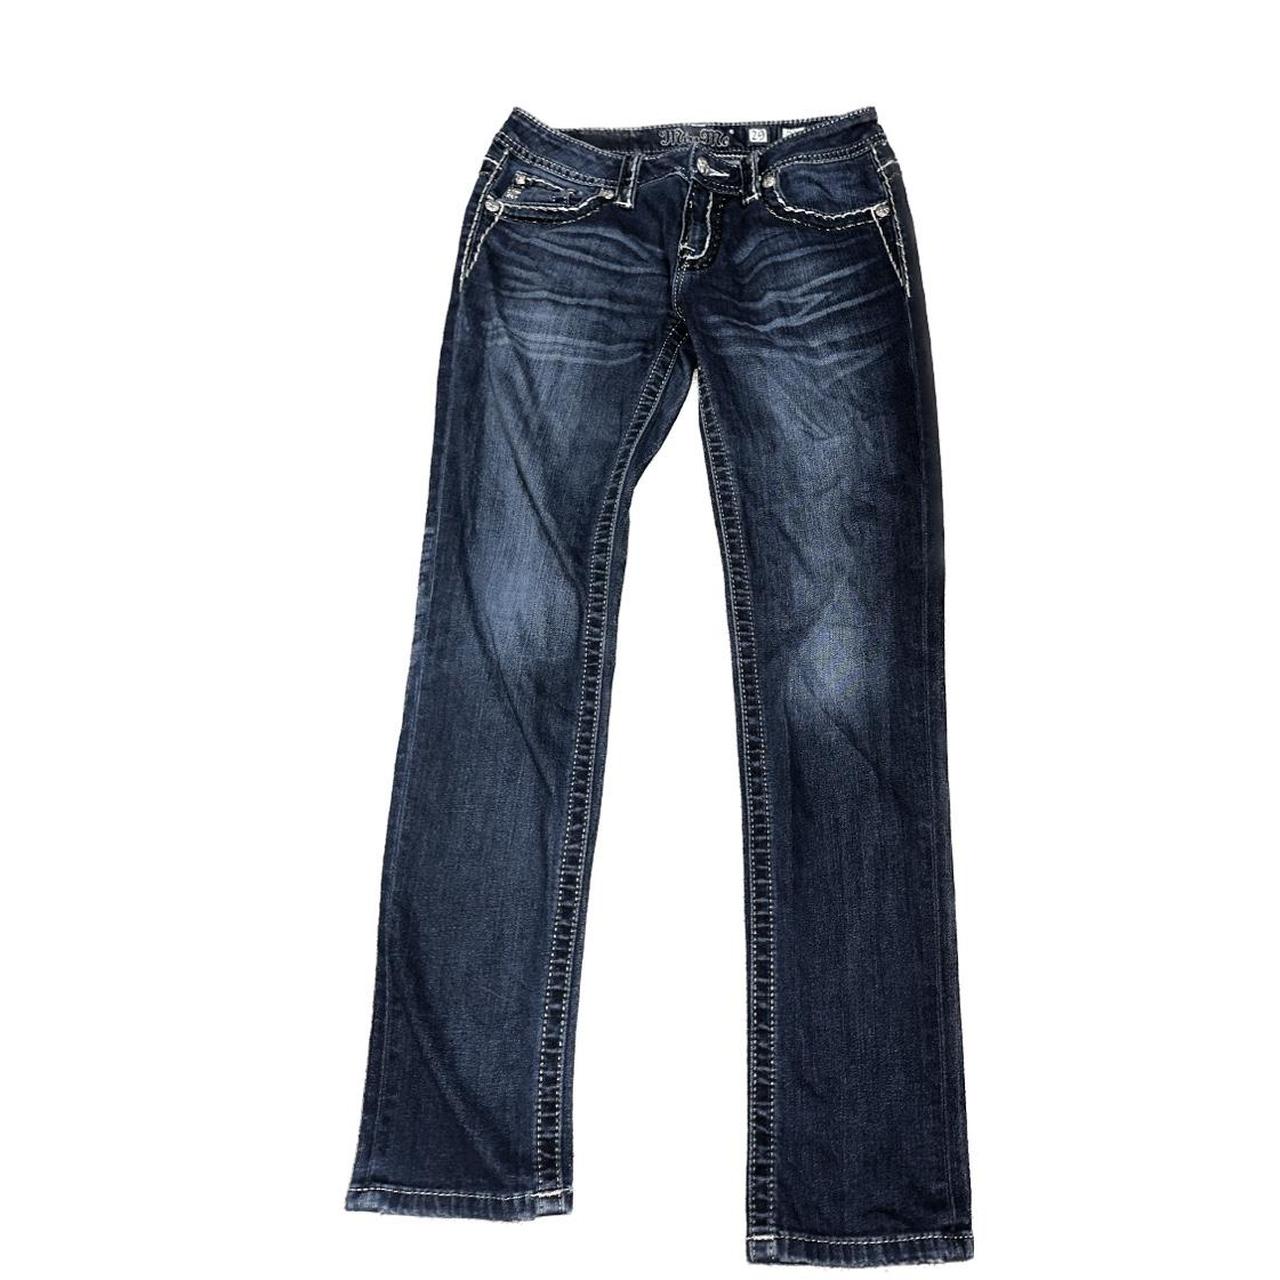 Miss me skinny mid-rise jeans (Size 29) - Depop